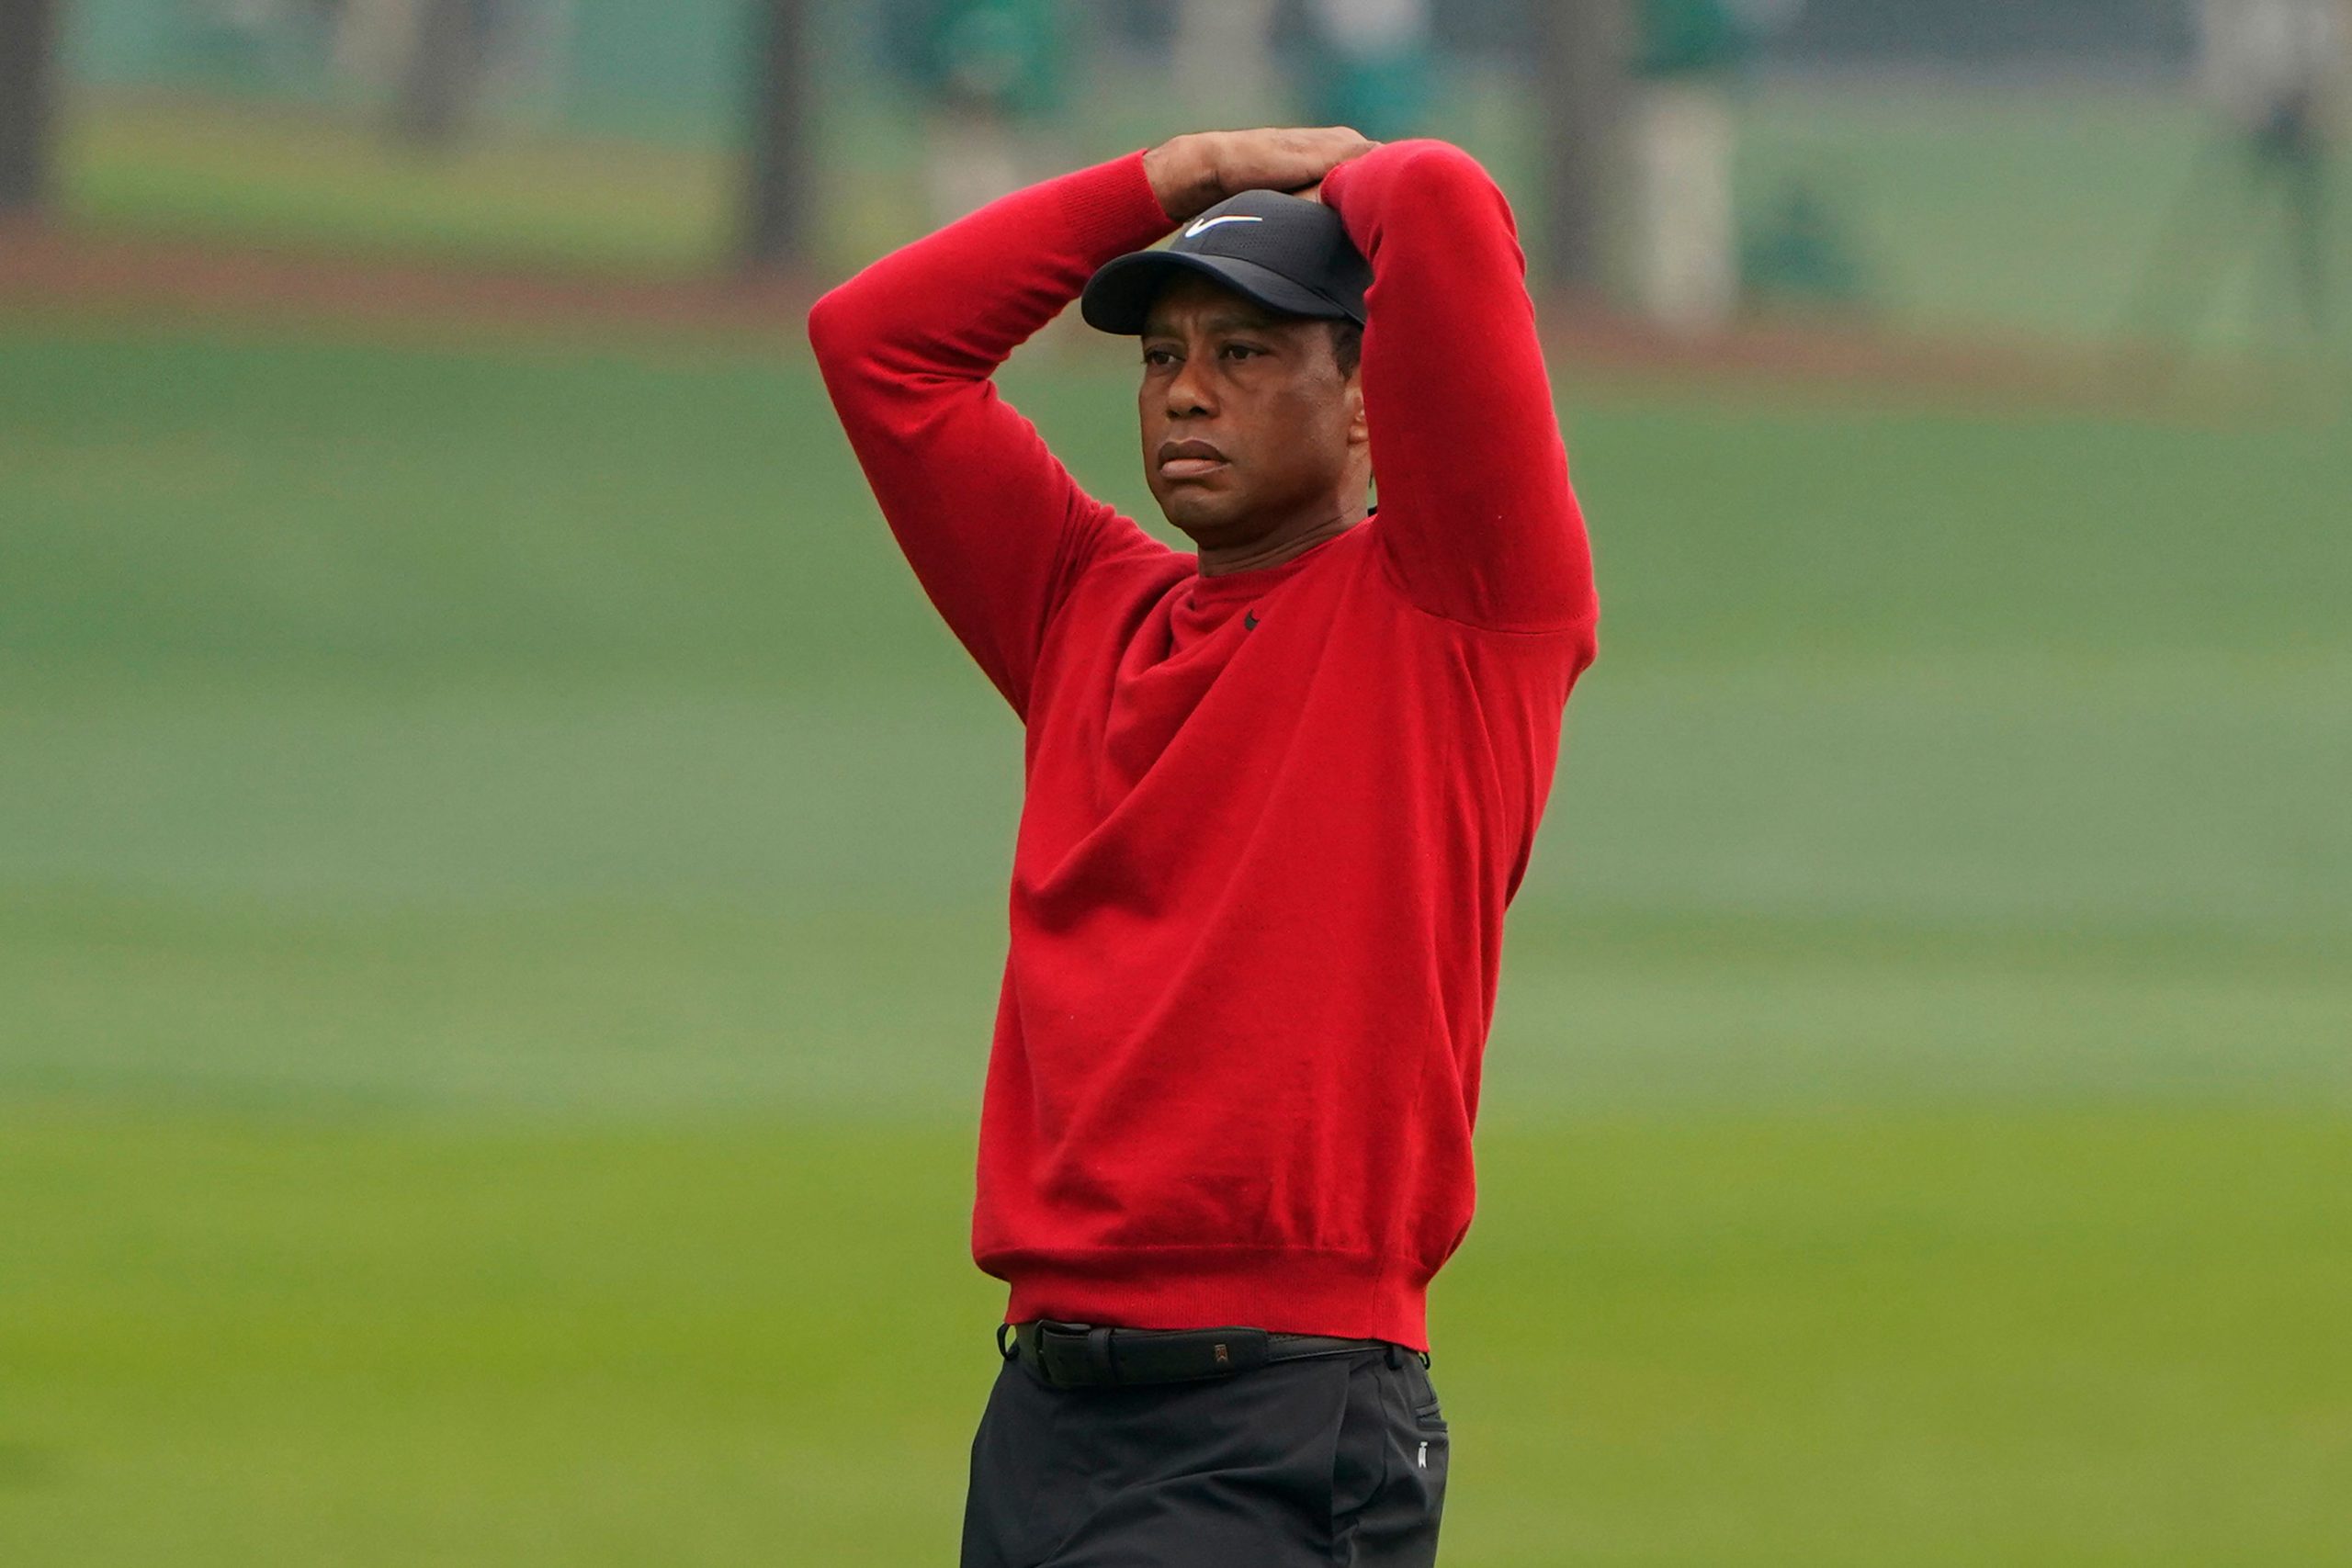 Donald Trump, Barack Obama wish speedy recovery to Tiger Woods